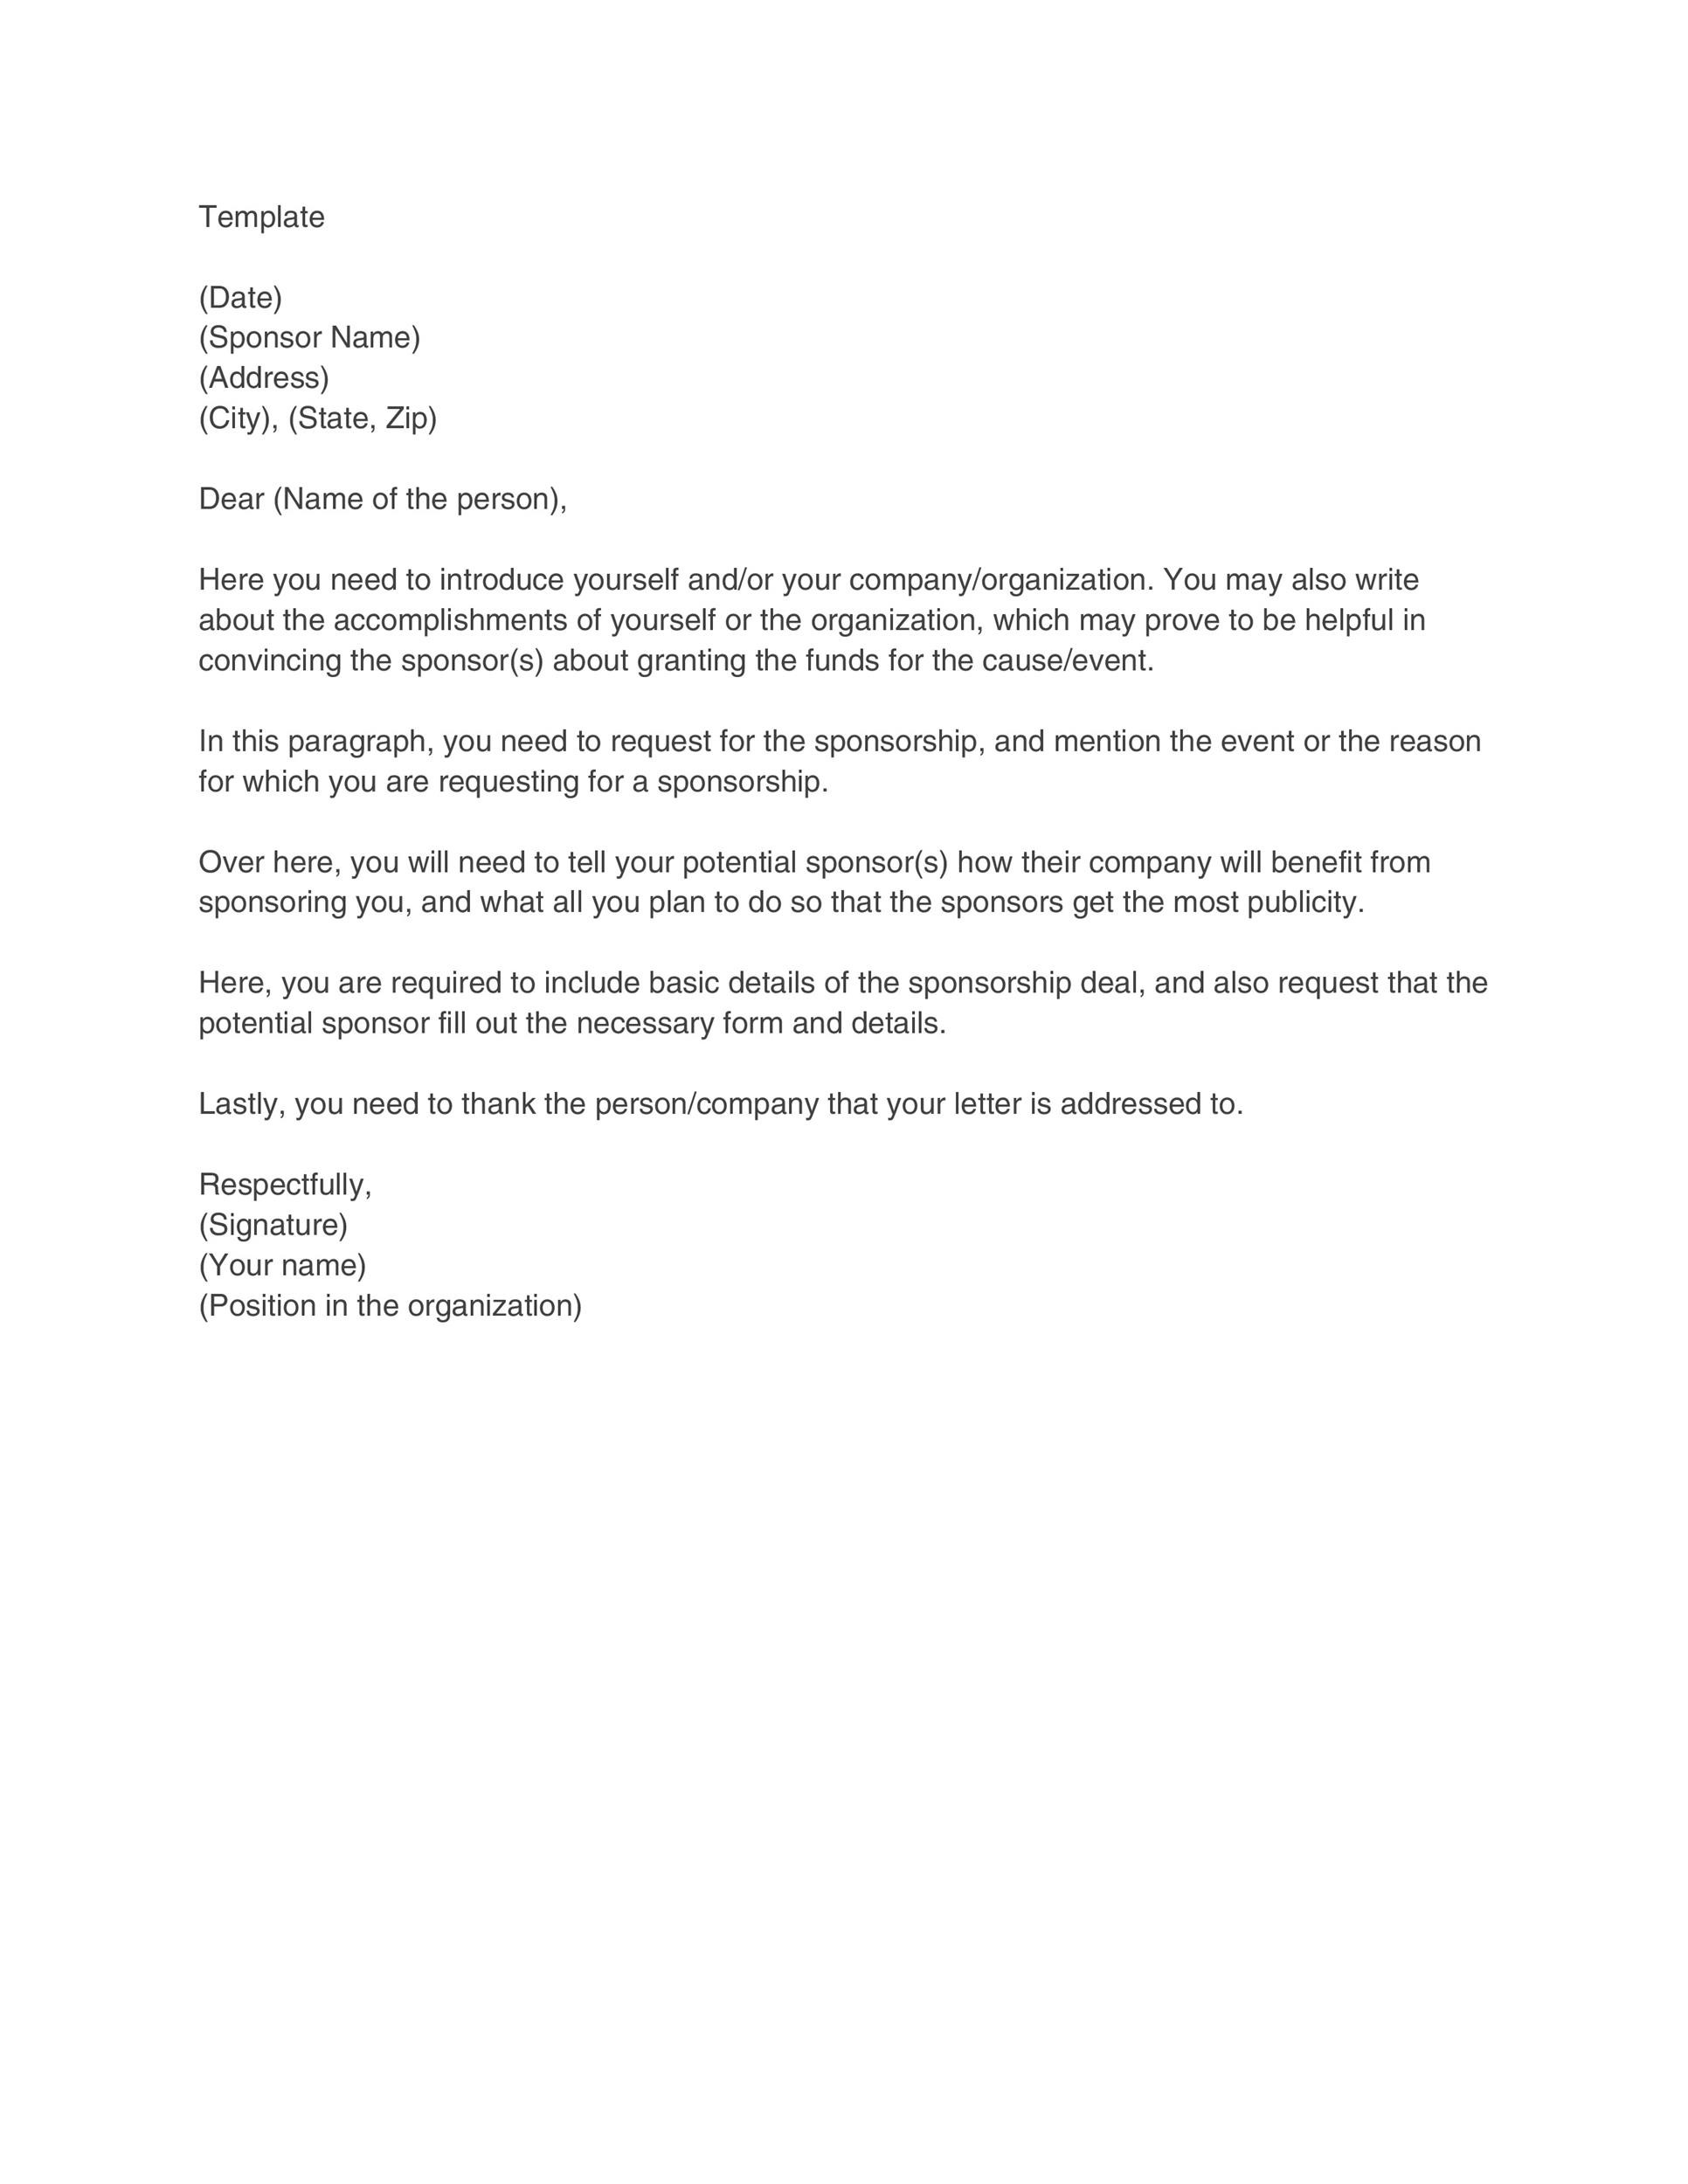 Sample Sports Sponsorship Letter from templatelab.com